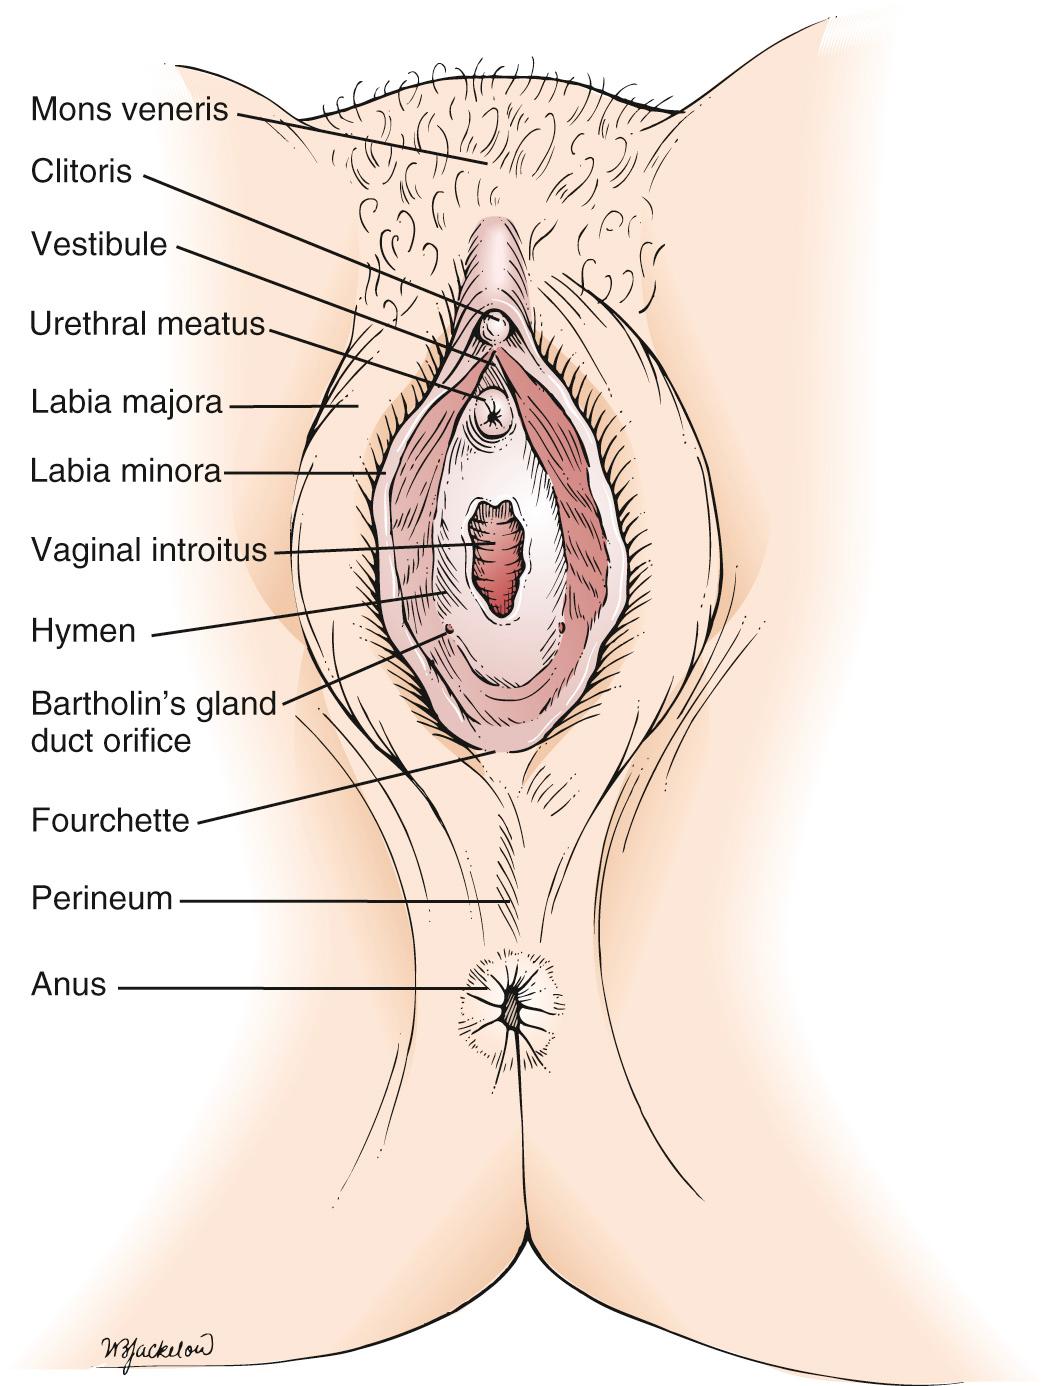 Fig. 19.1, The External Female Genitalia.